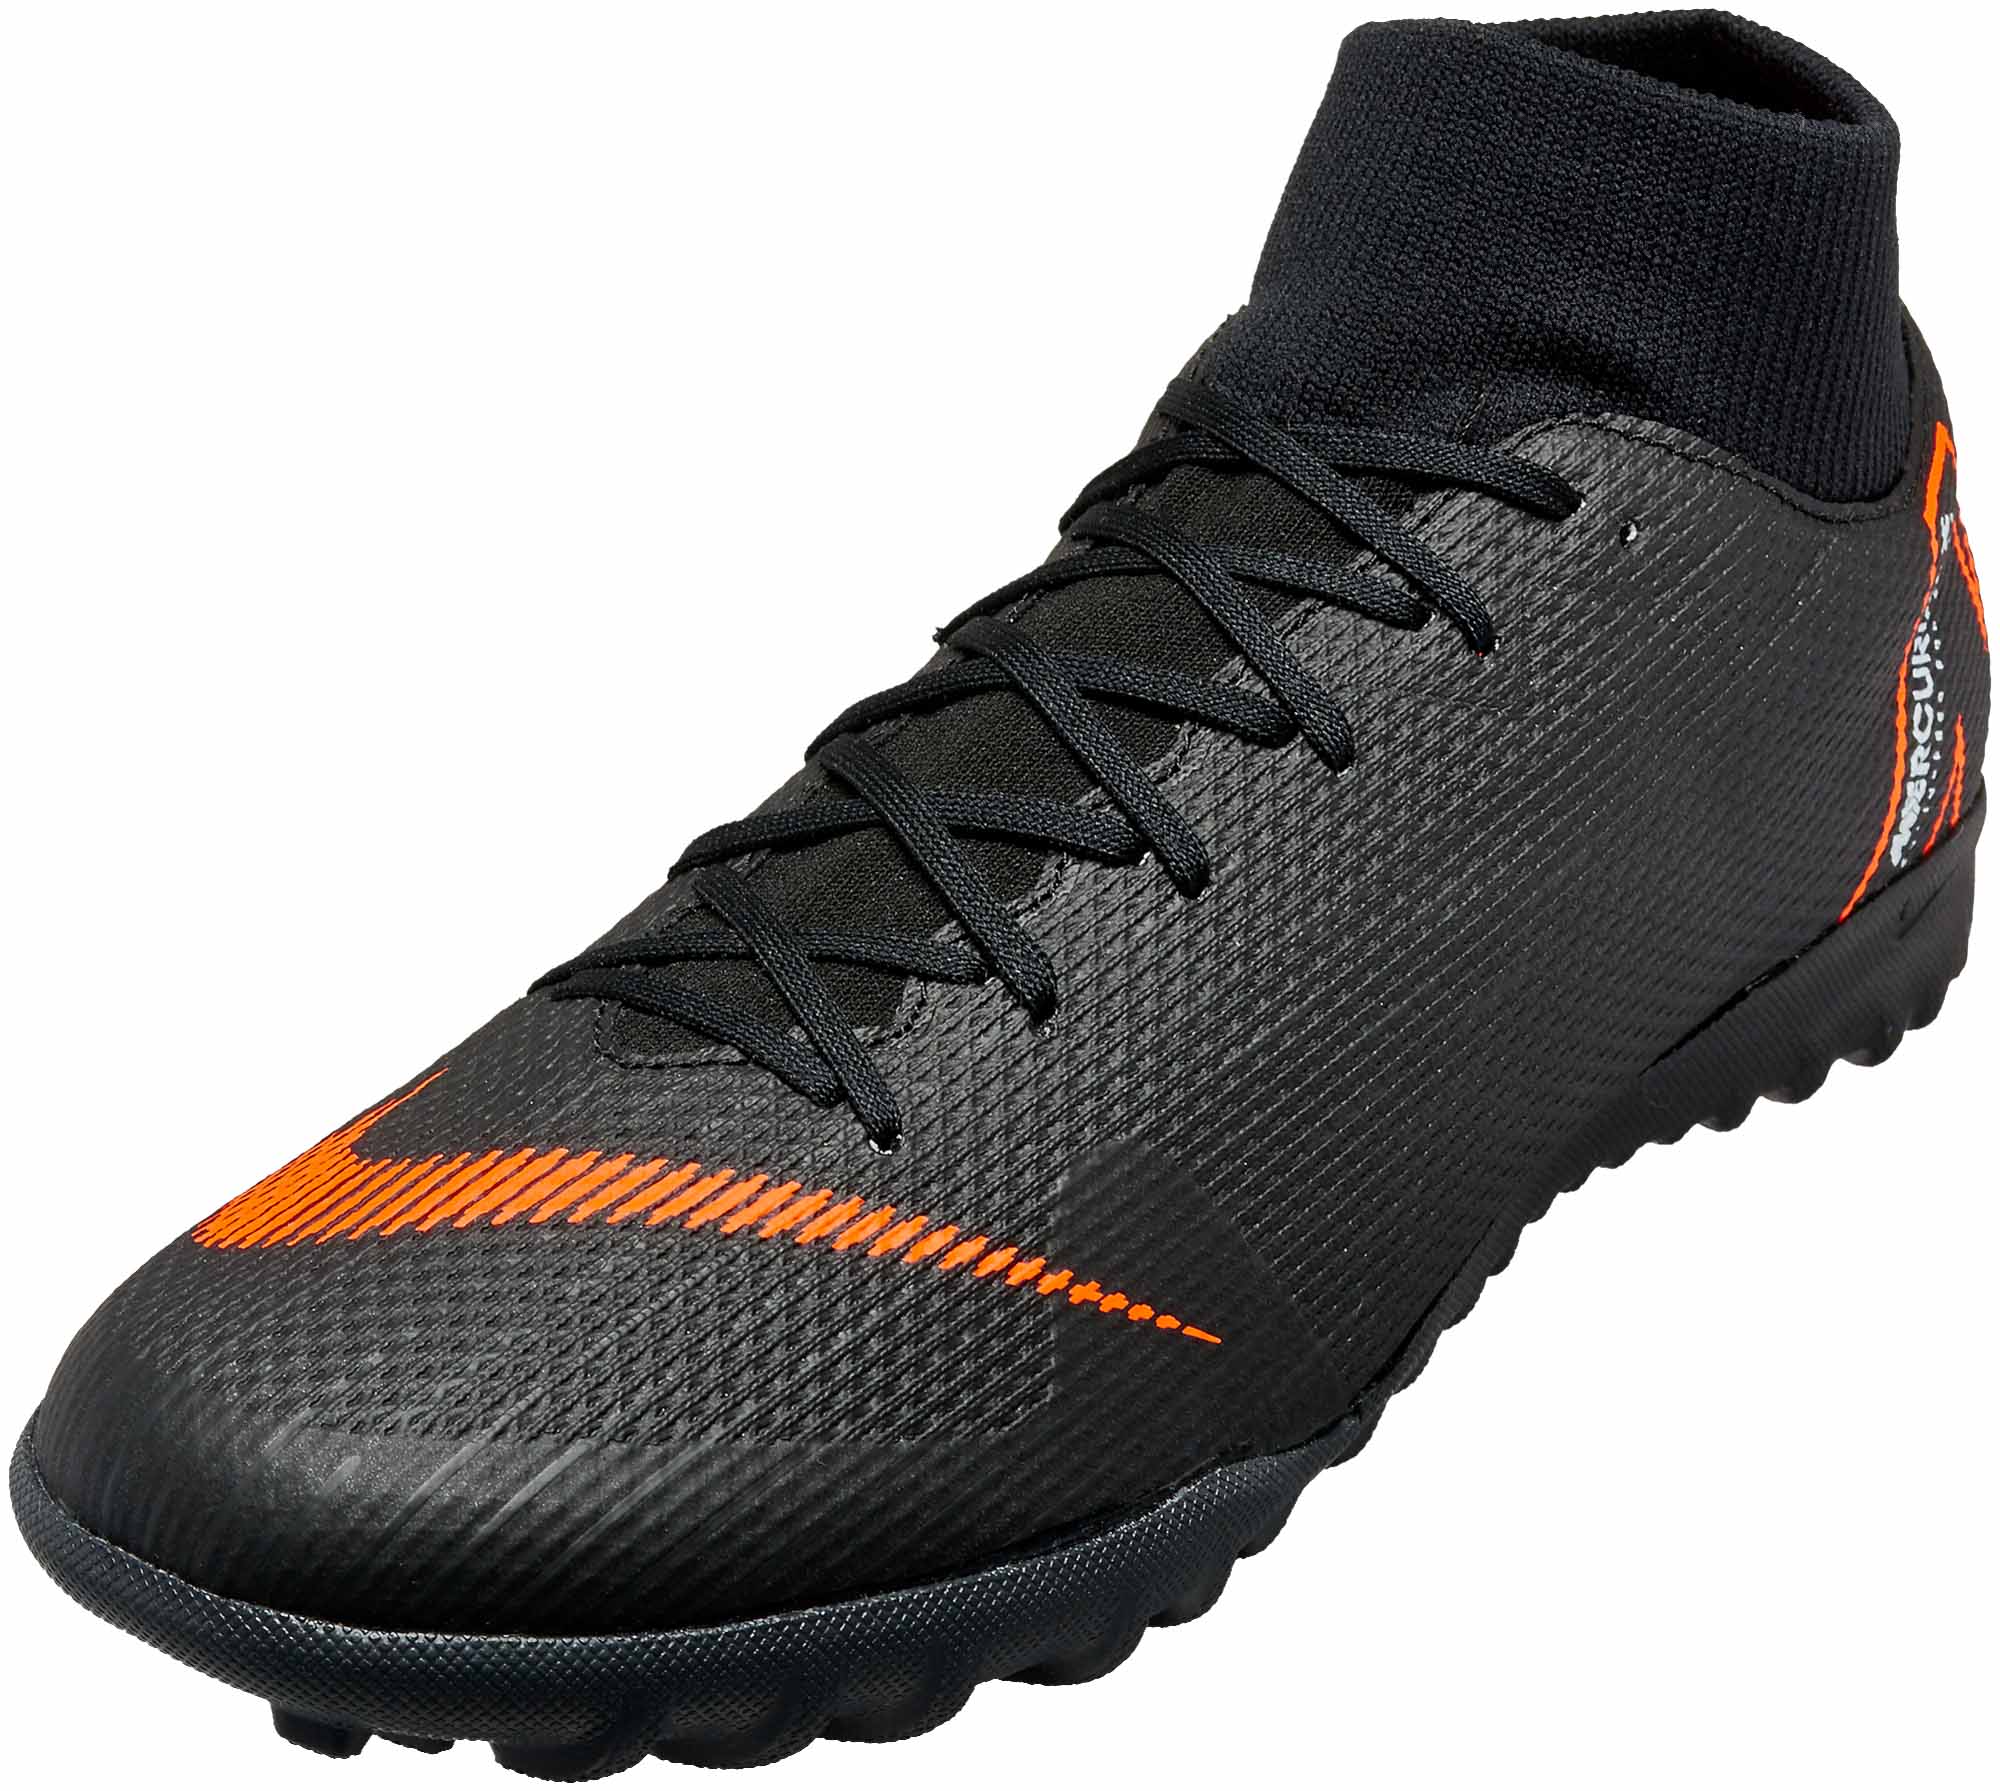 Nike SuperflyX 6 Academy TF - Black/Total Orange - SoccerPro